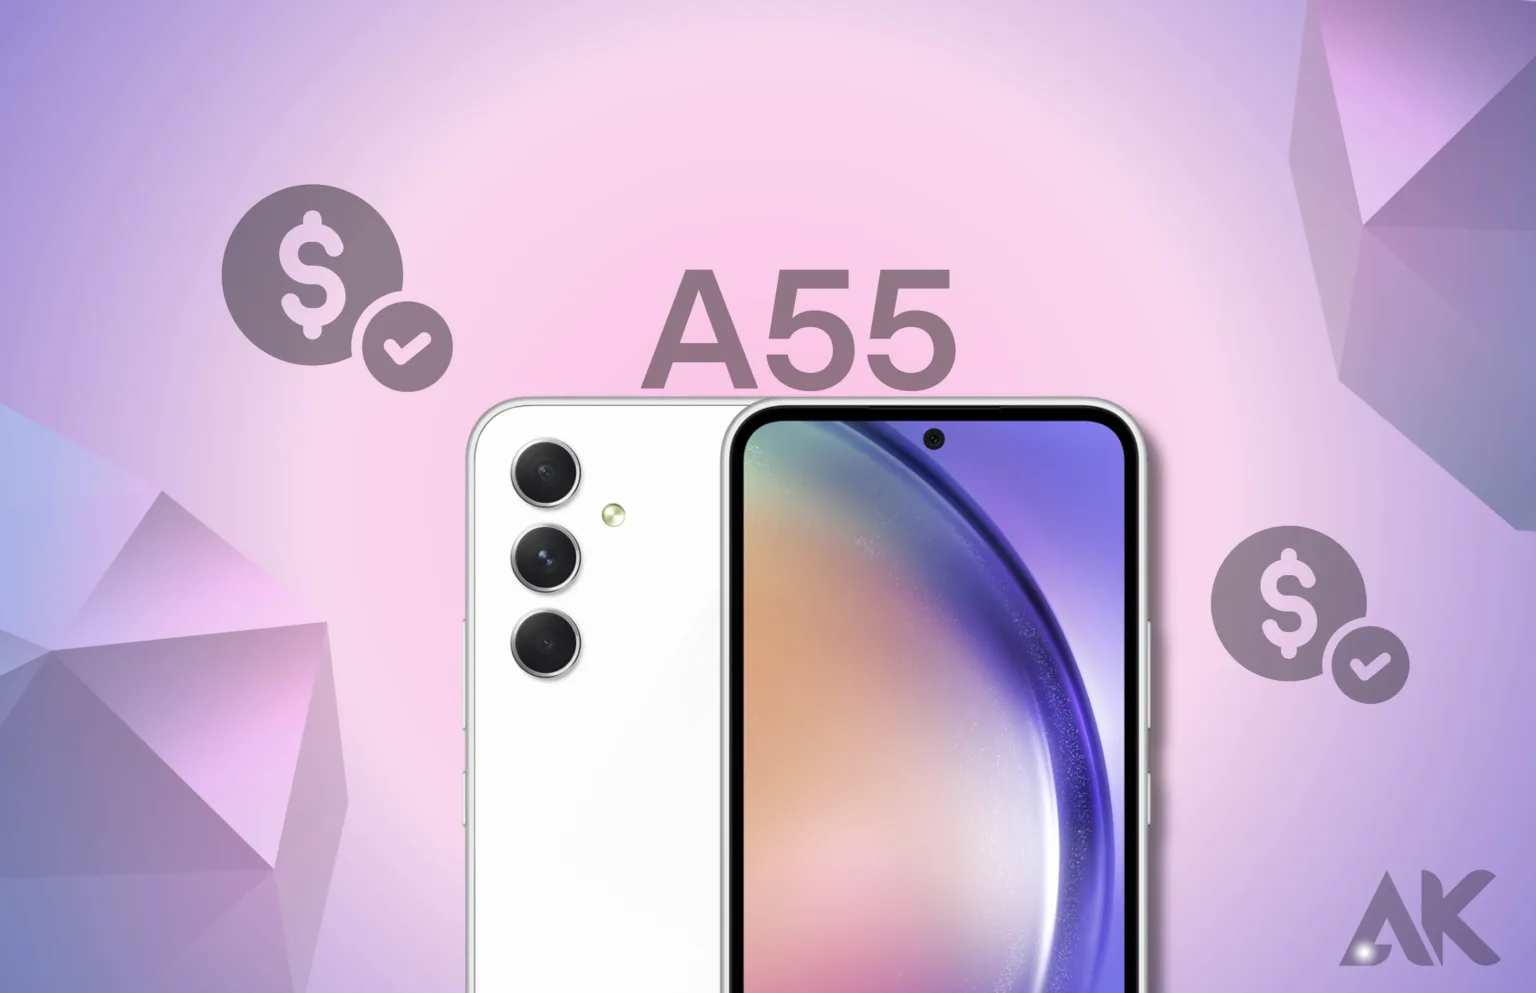 Samsung A55 price